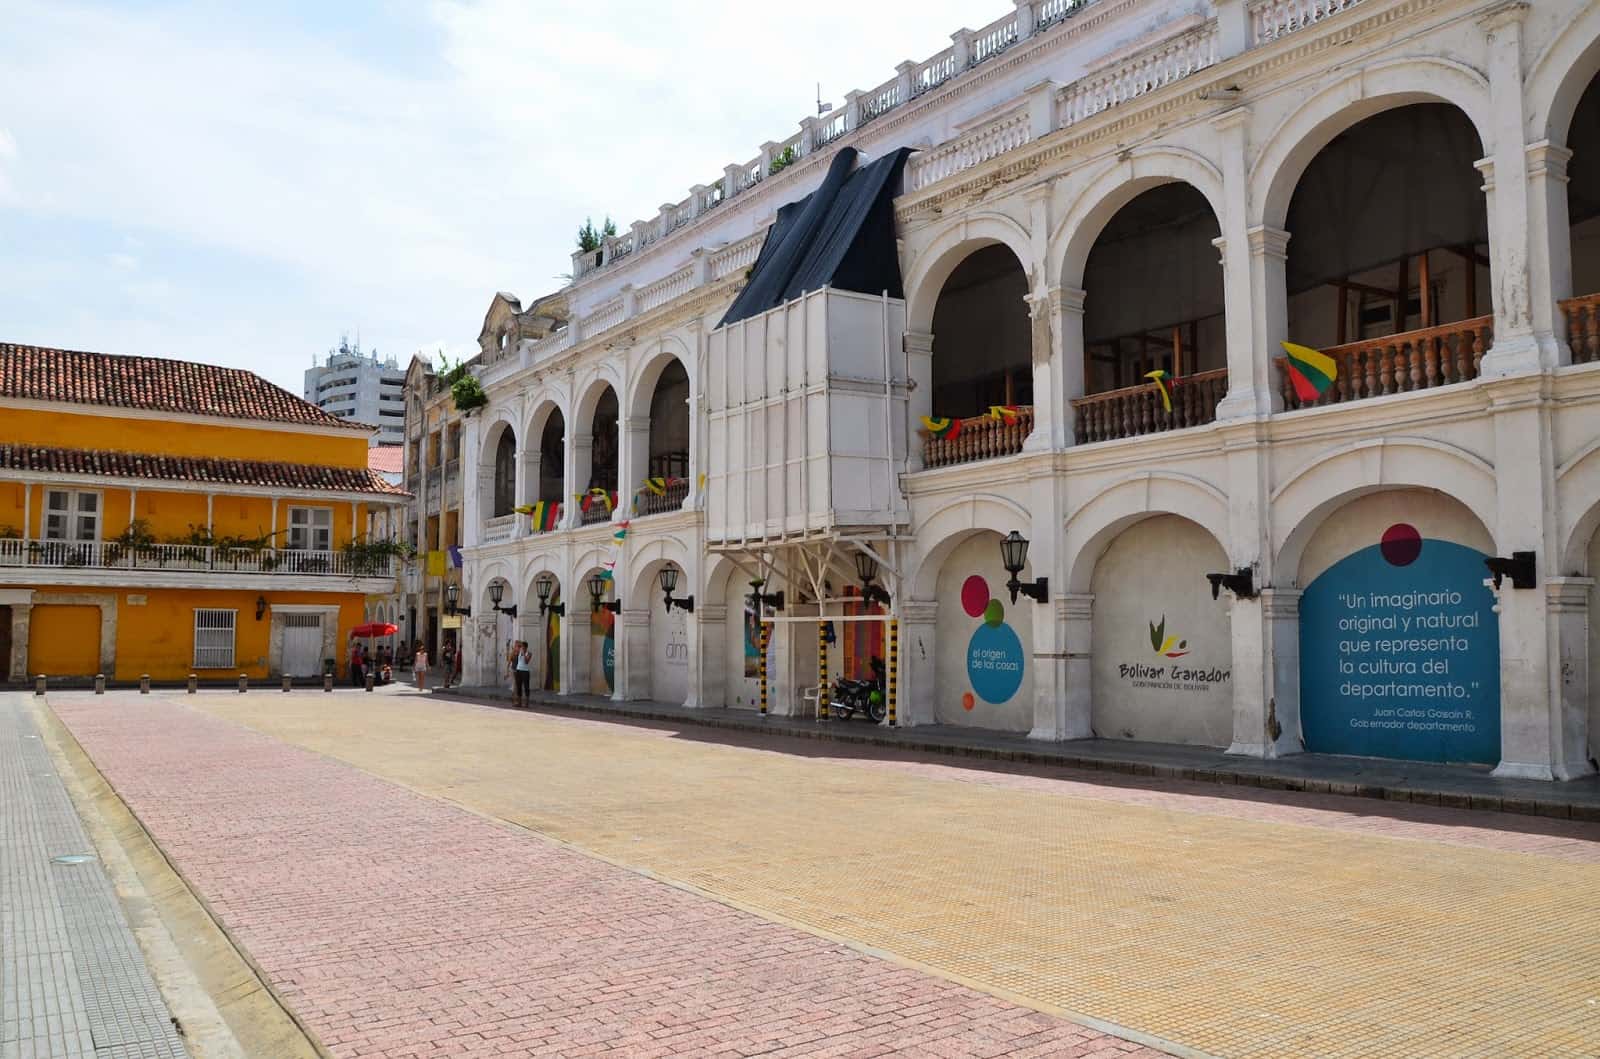 Cabildo under renovation in 2014